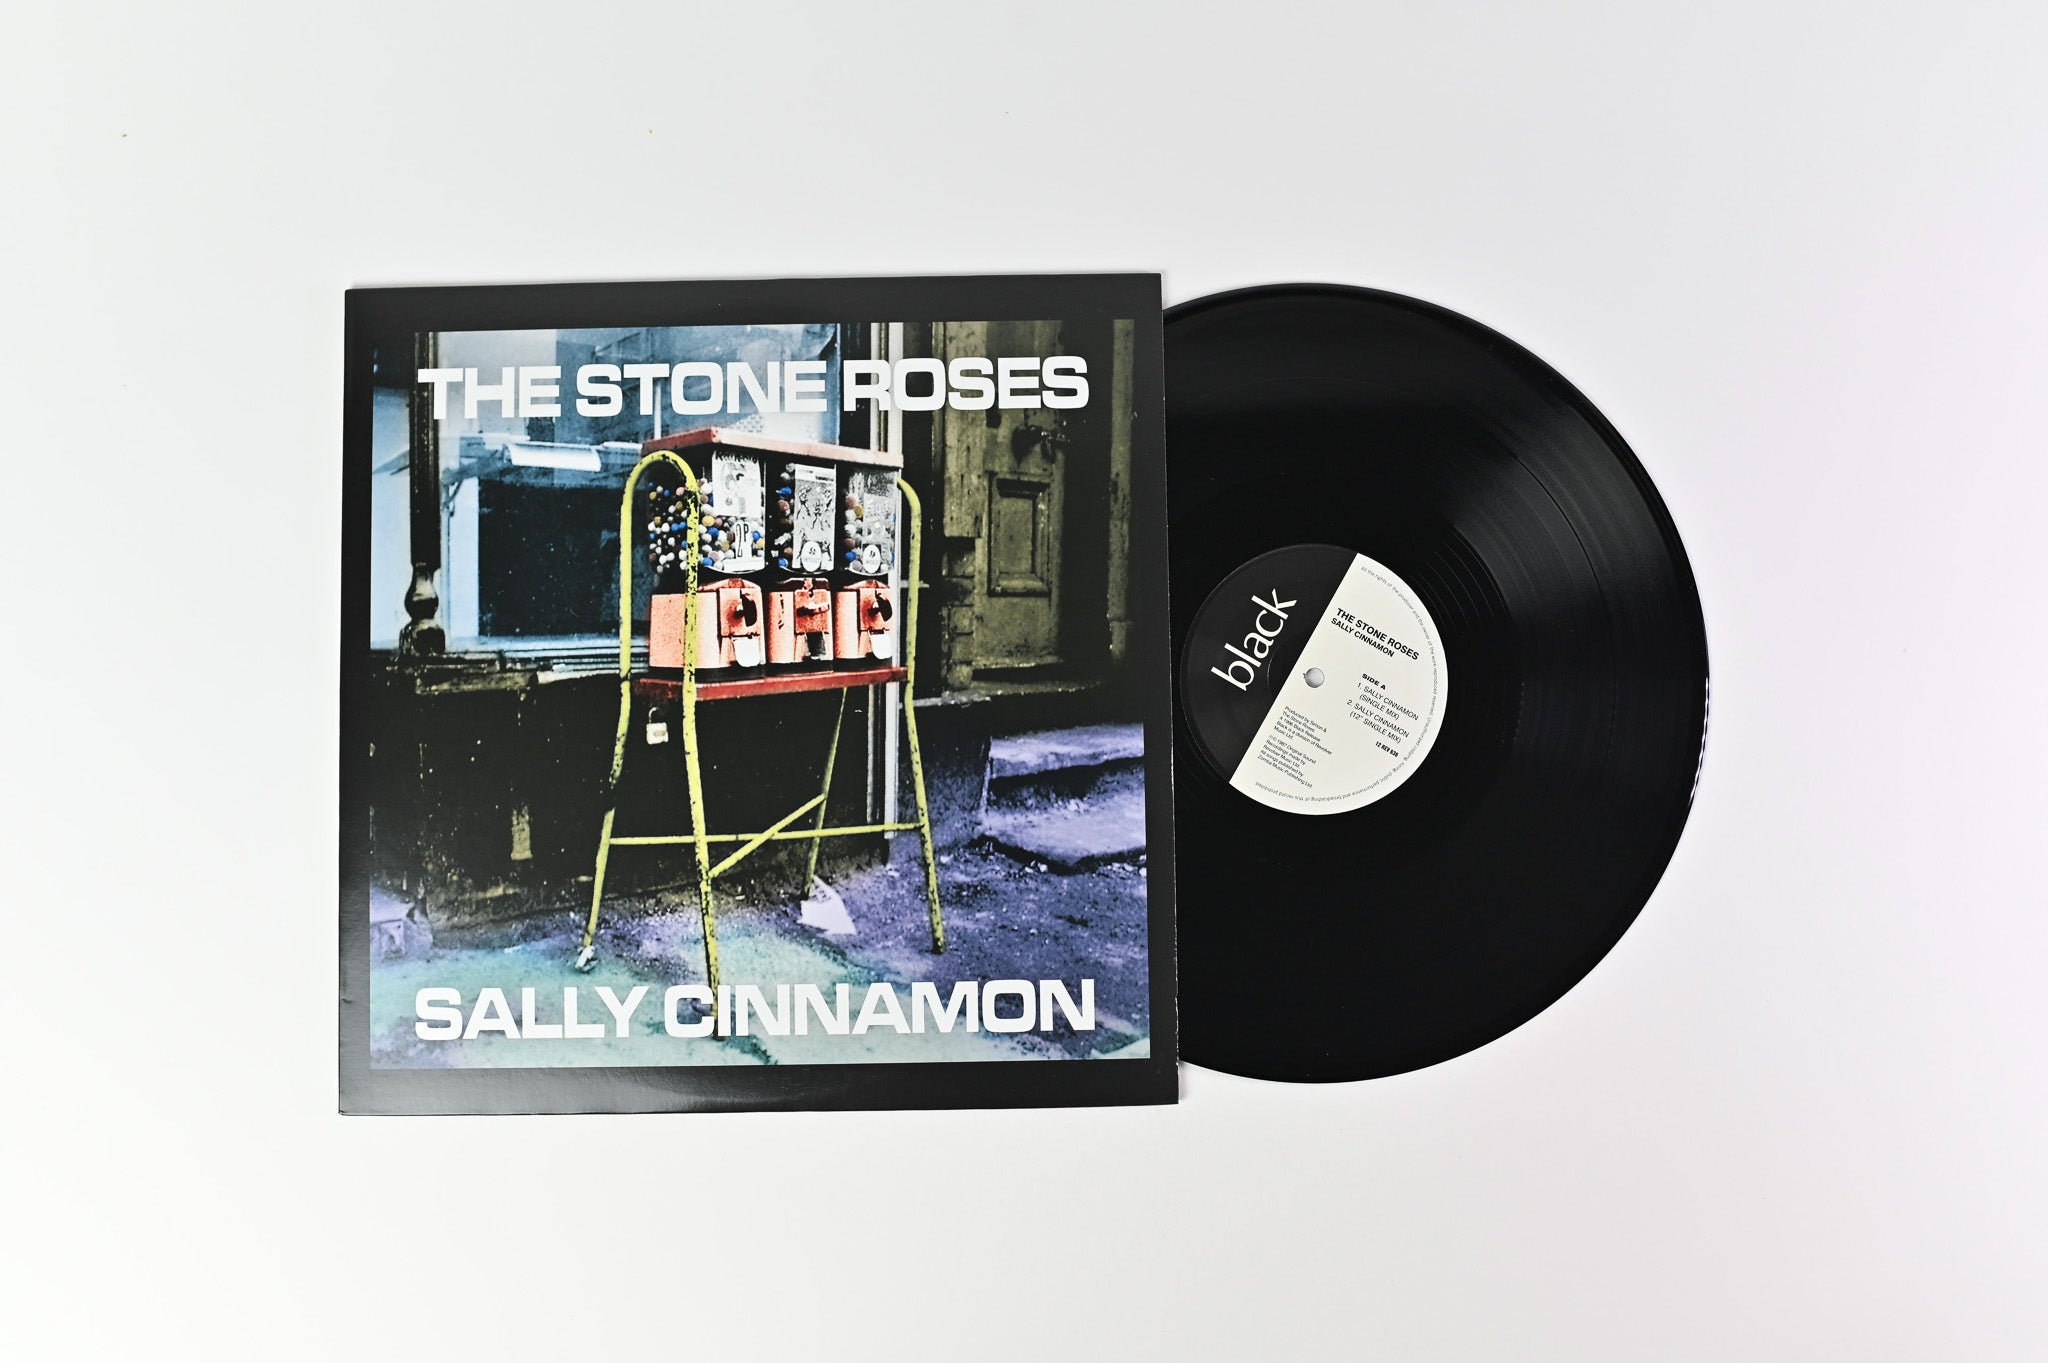 The Stone Roses - Sally Cinnamon on MVD Audio